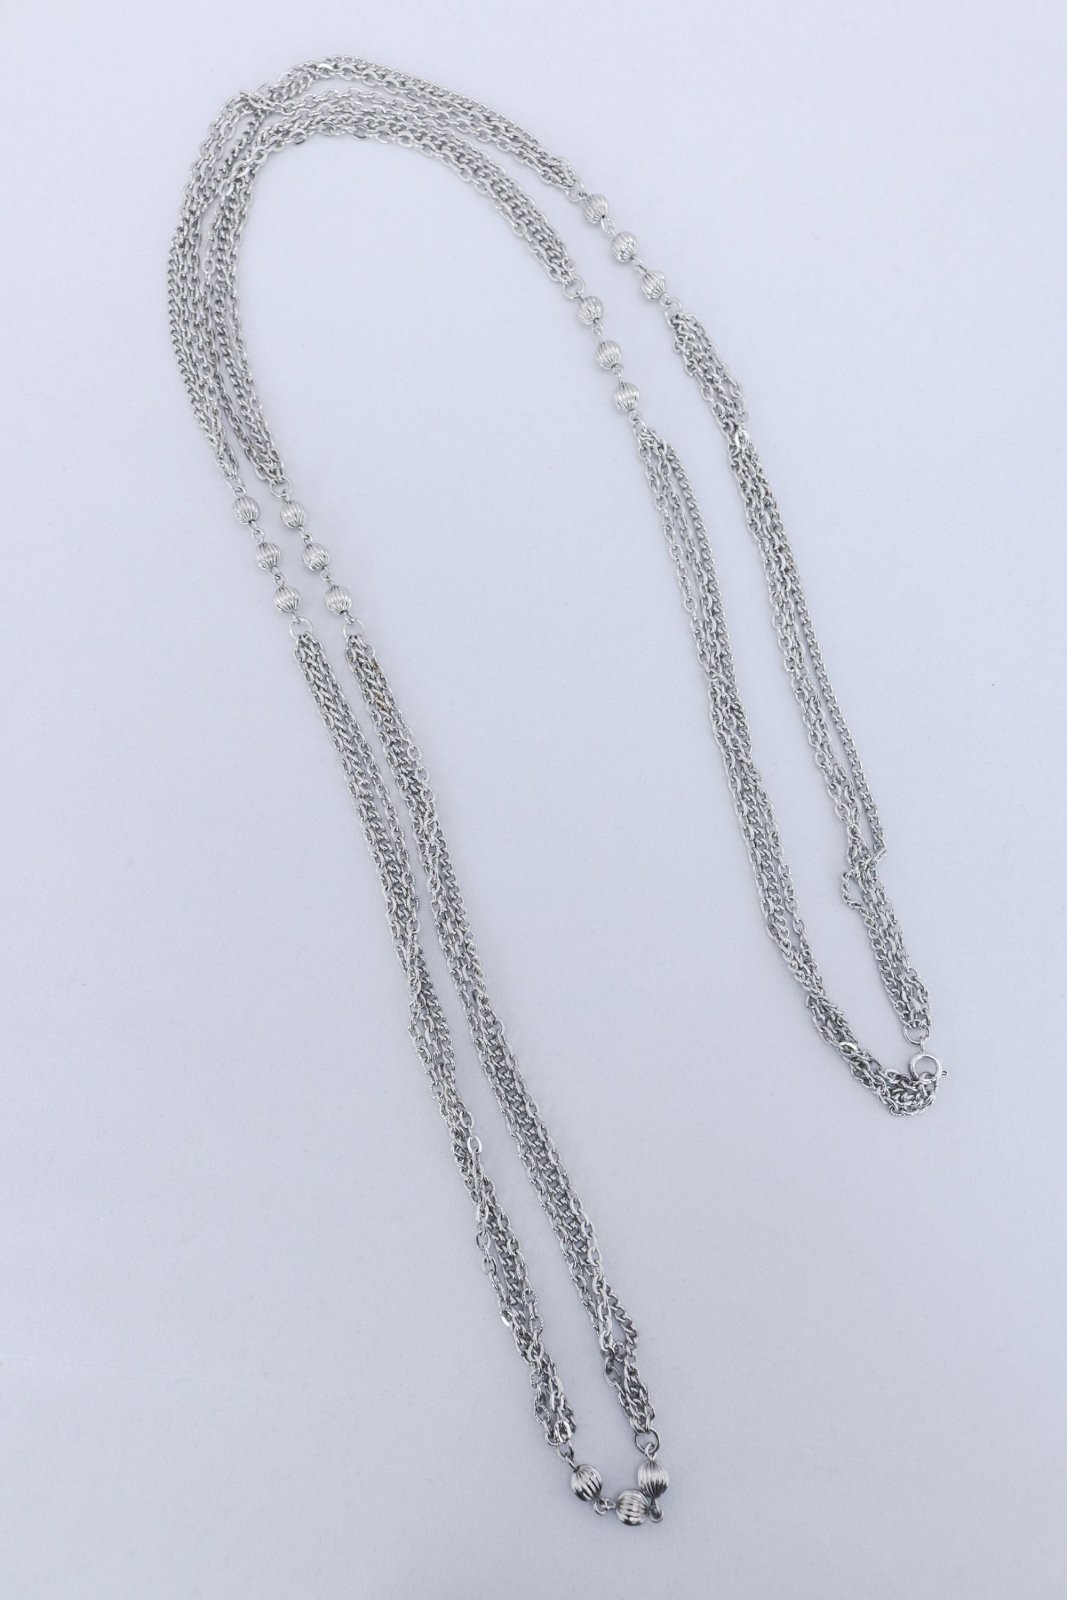 1970s Extra Long Multi-Chain Necklace - Floria Vintage